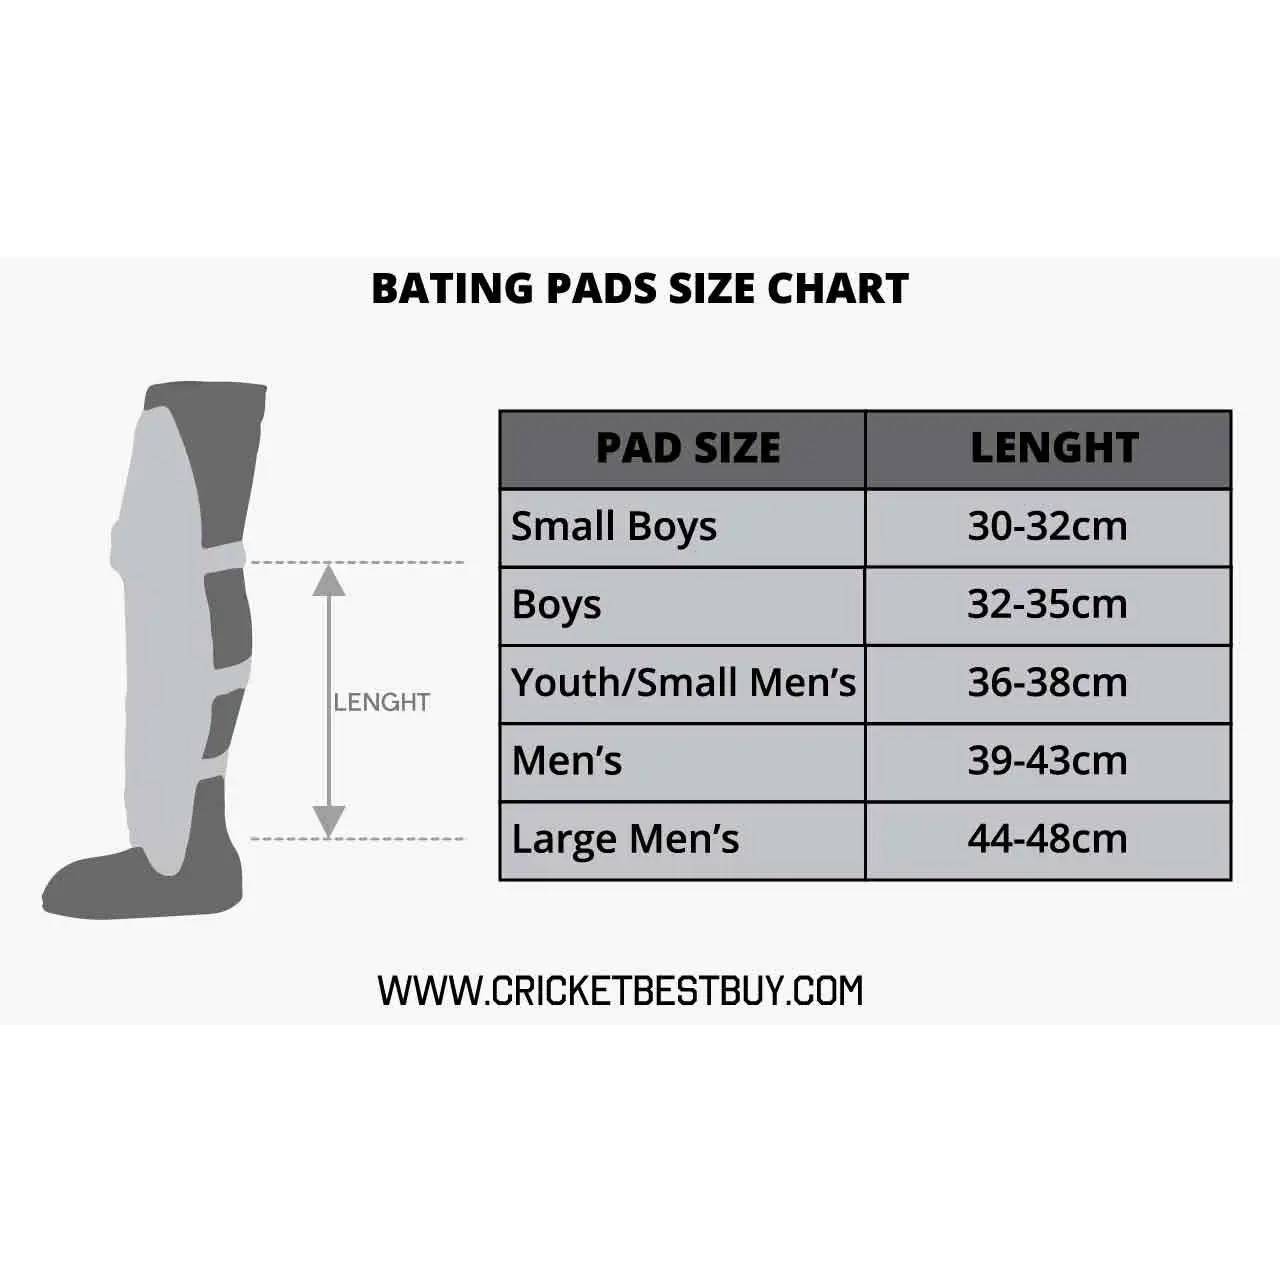 SS TON Elite Cricket Batting Pads- Premium Quality and Lightweight For Boys - Boys - PADS - BATTING